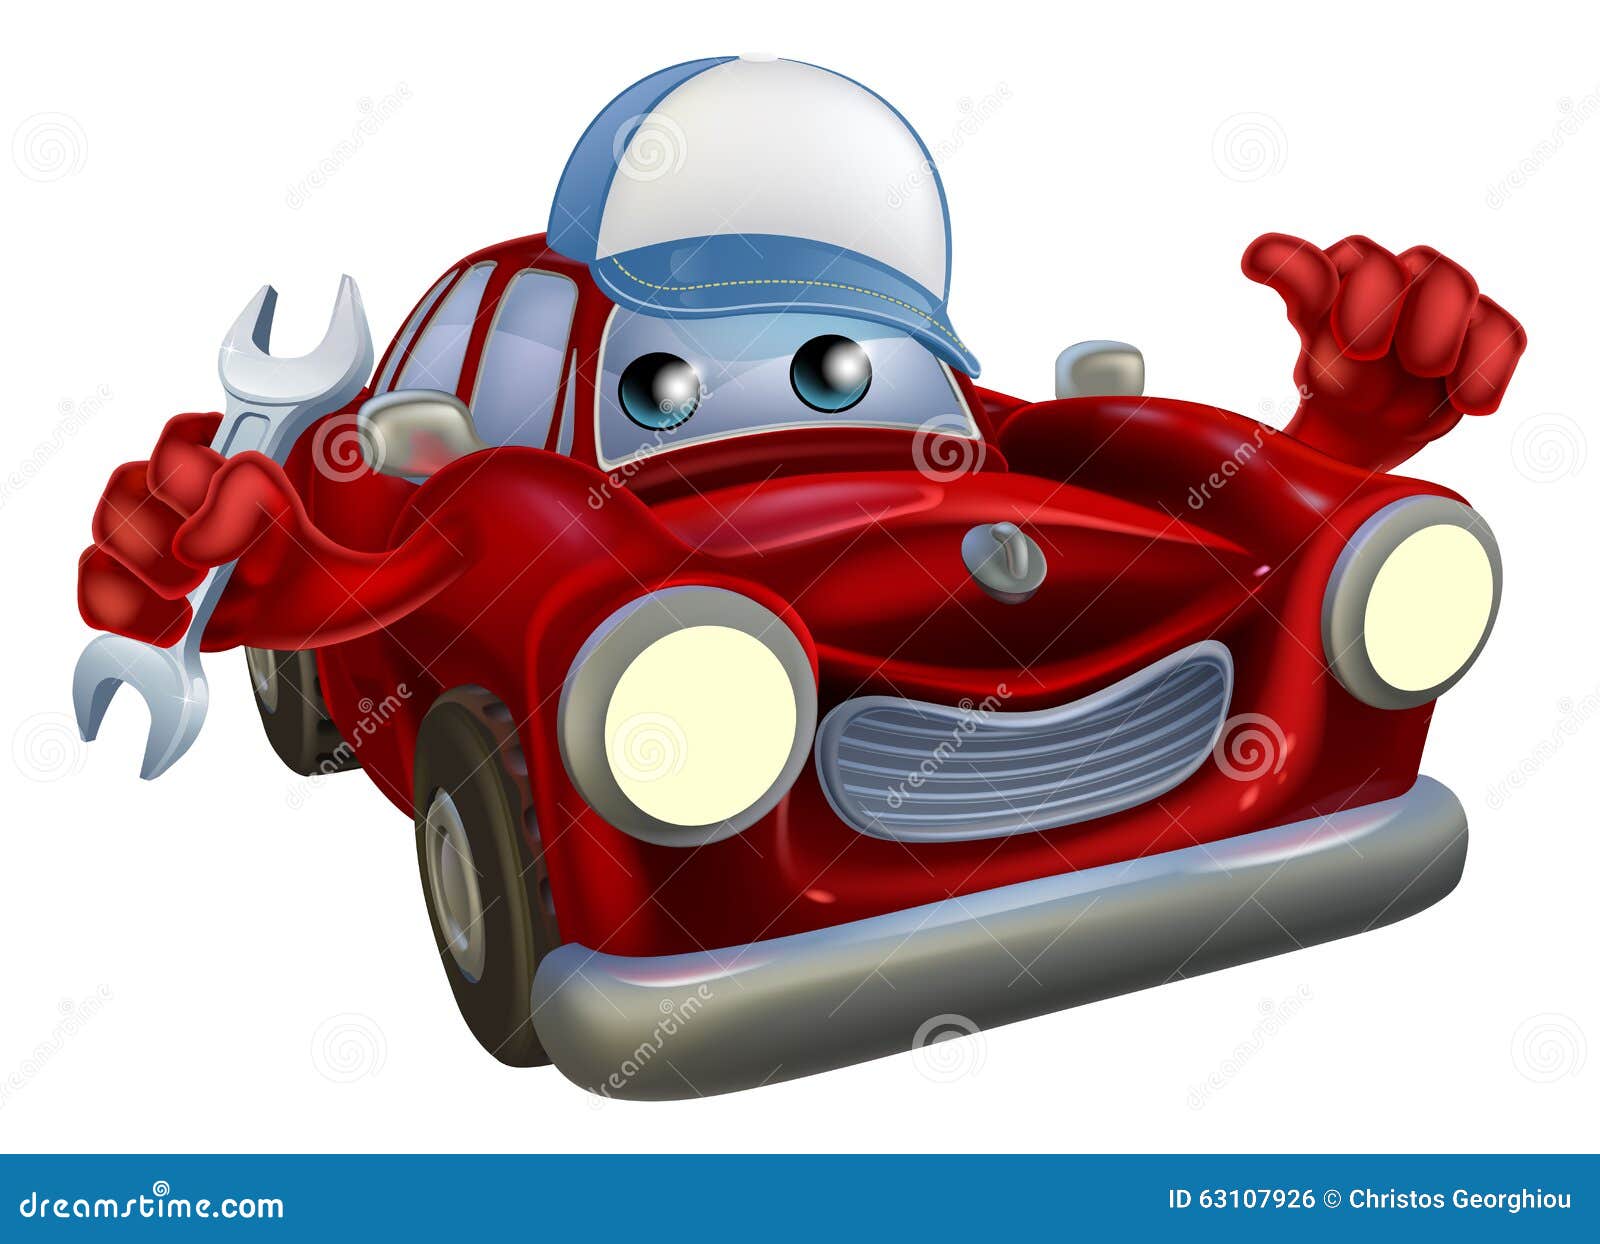 cartoon car mechanic character drawing red mascot wearing baseball hat holding wrech giving thumbs up 63107926